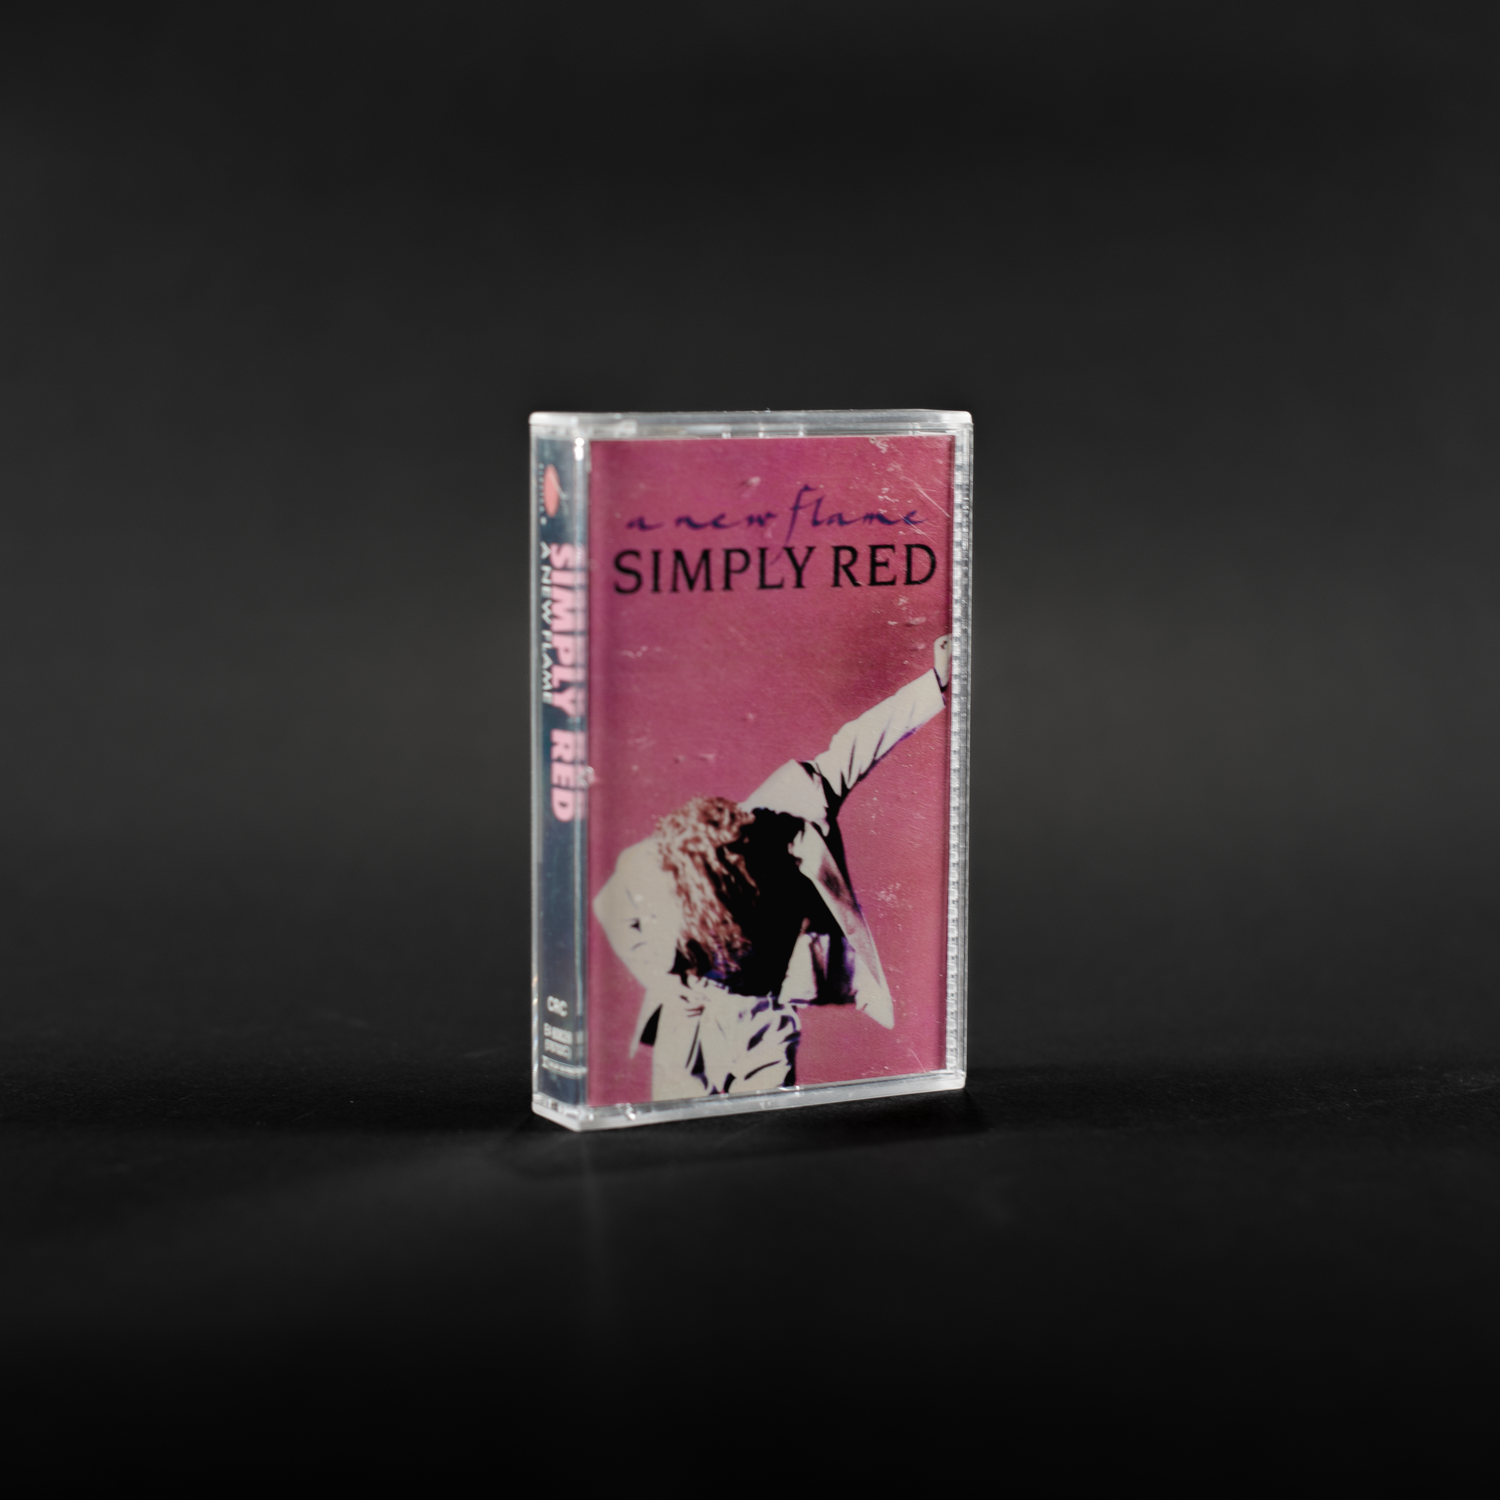 Simply Red - Une nouvelle flamme (cassette vintage)